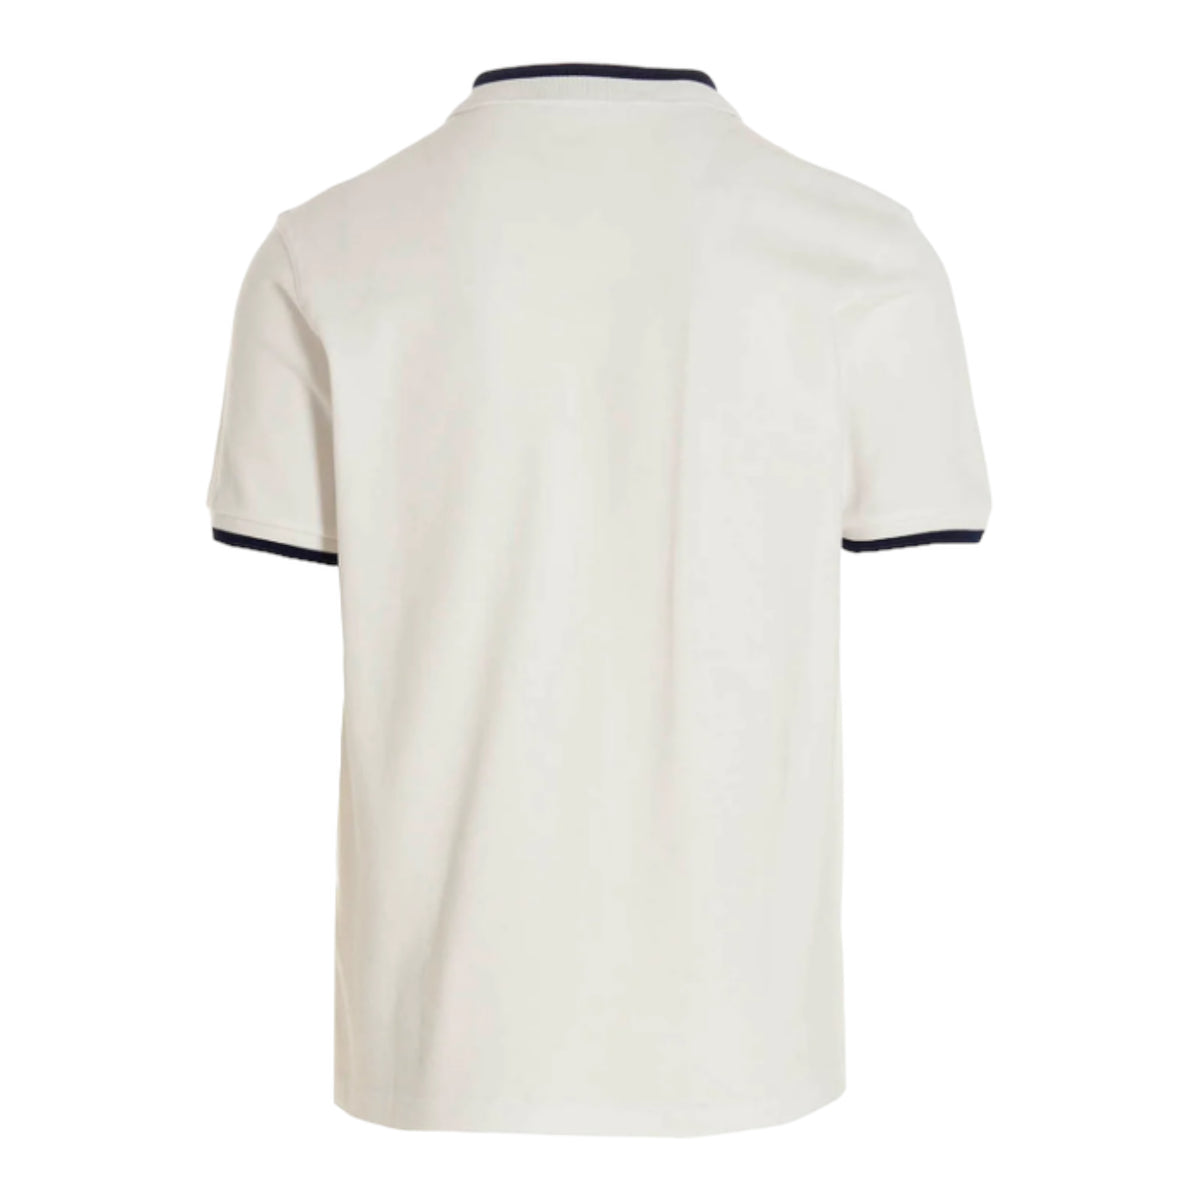 Kenzo Men's Nautical Slim Fit Polo Shirt